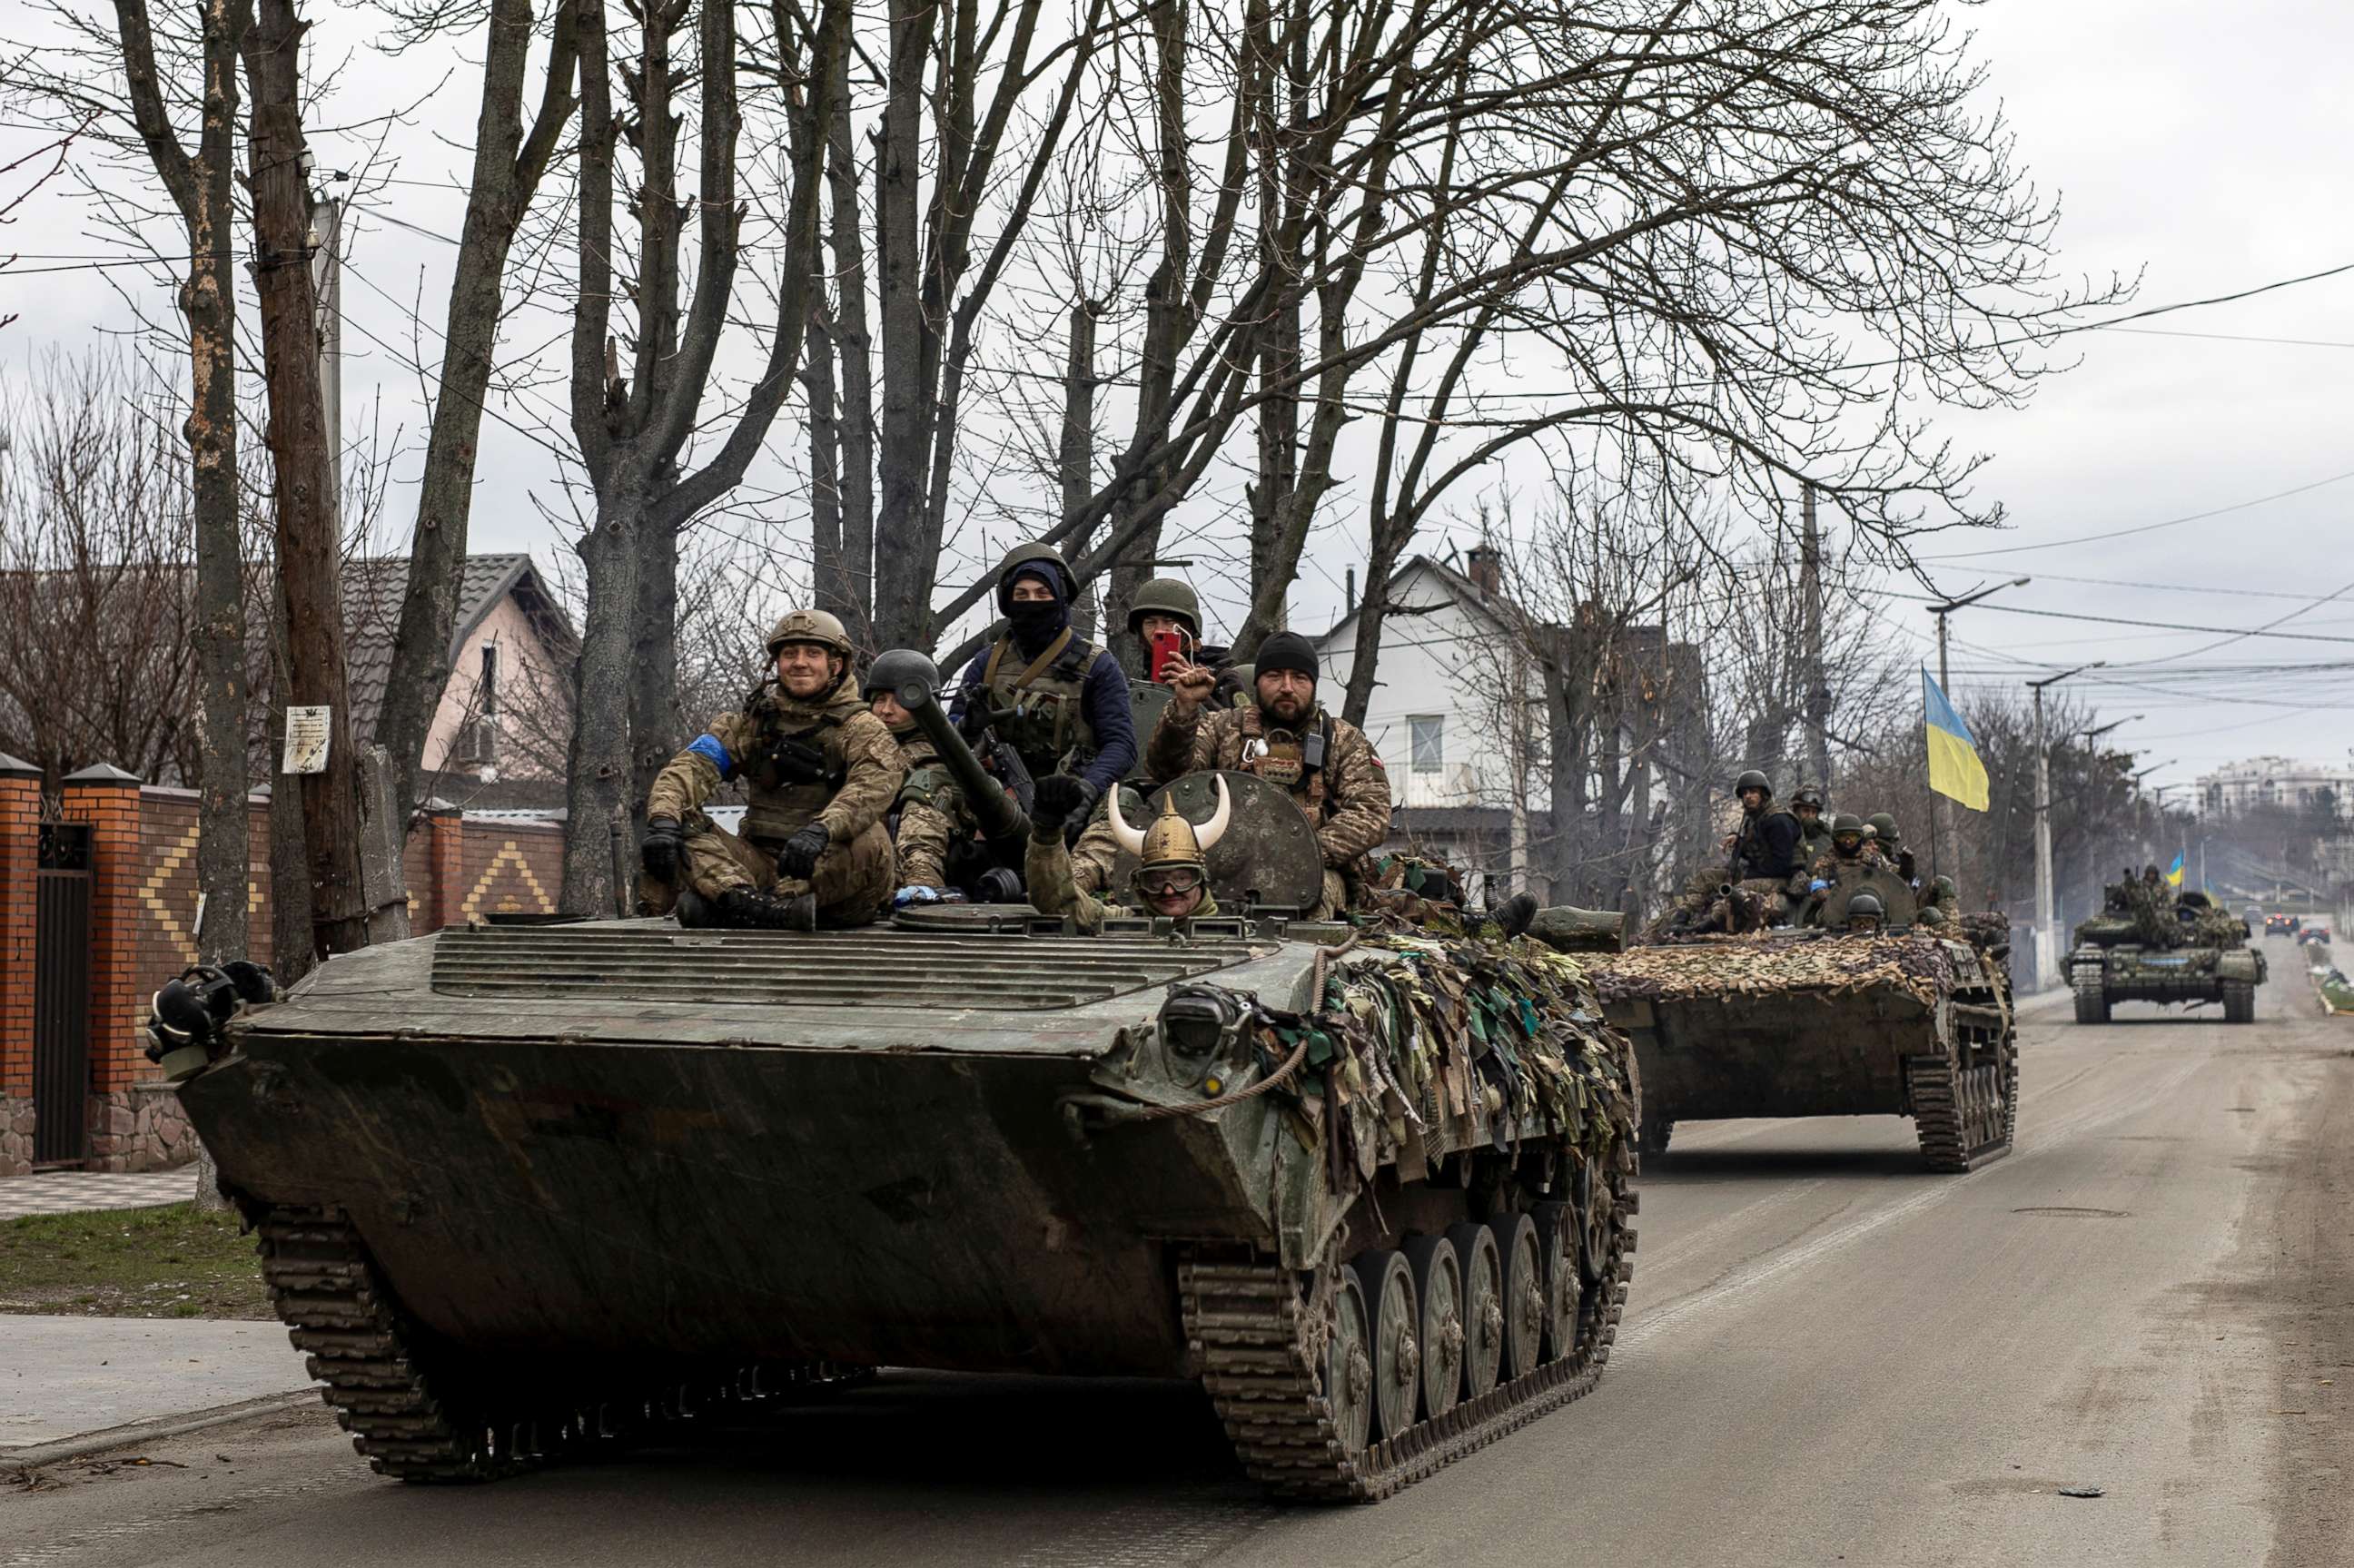 PHOTO: Ukrainian soldiers are seen on tanks, amid Russia's invasion of Ukraine, in Bucha, Kyiv region, Ukraine, April 6, 2022.